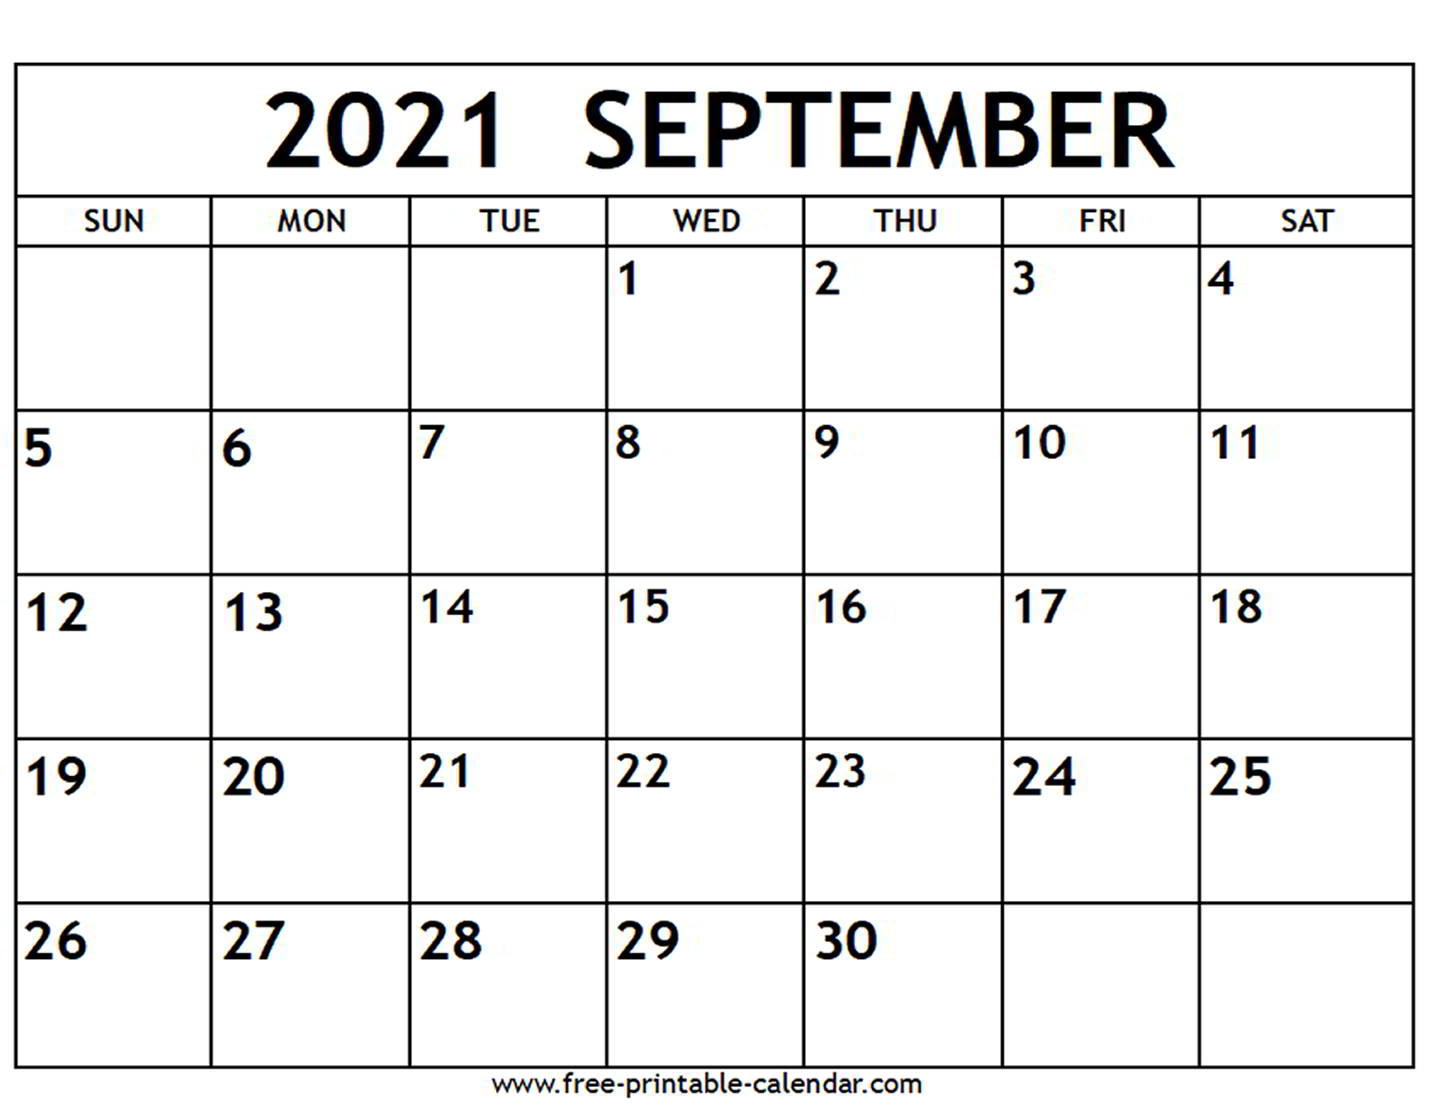 2021 November Calendar Free Printable | Example Calendar Printable in 2021 Calendar Free Printable